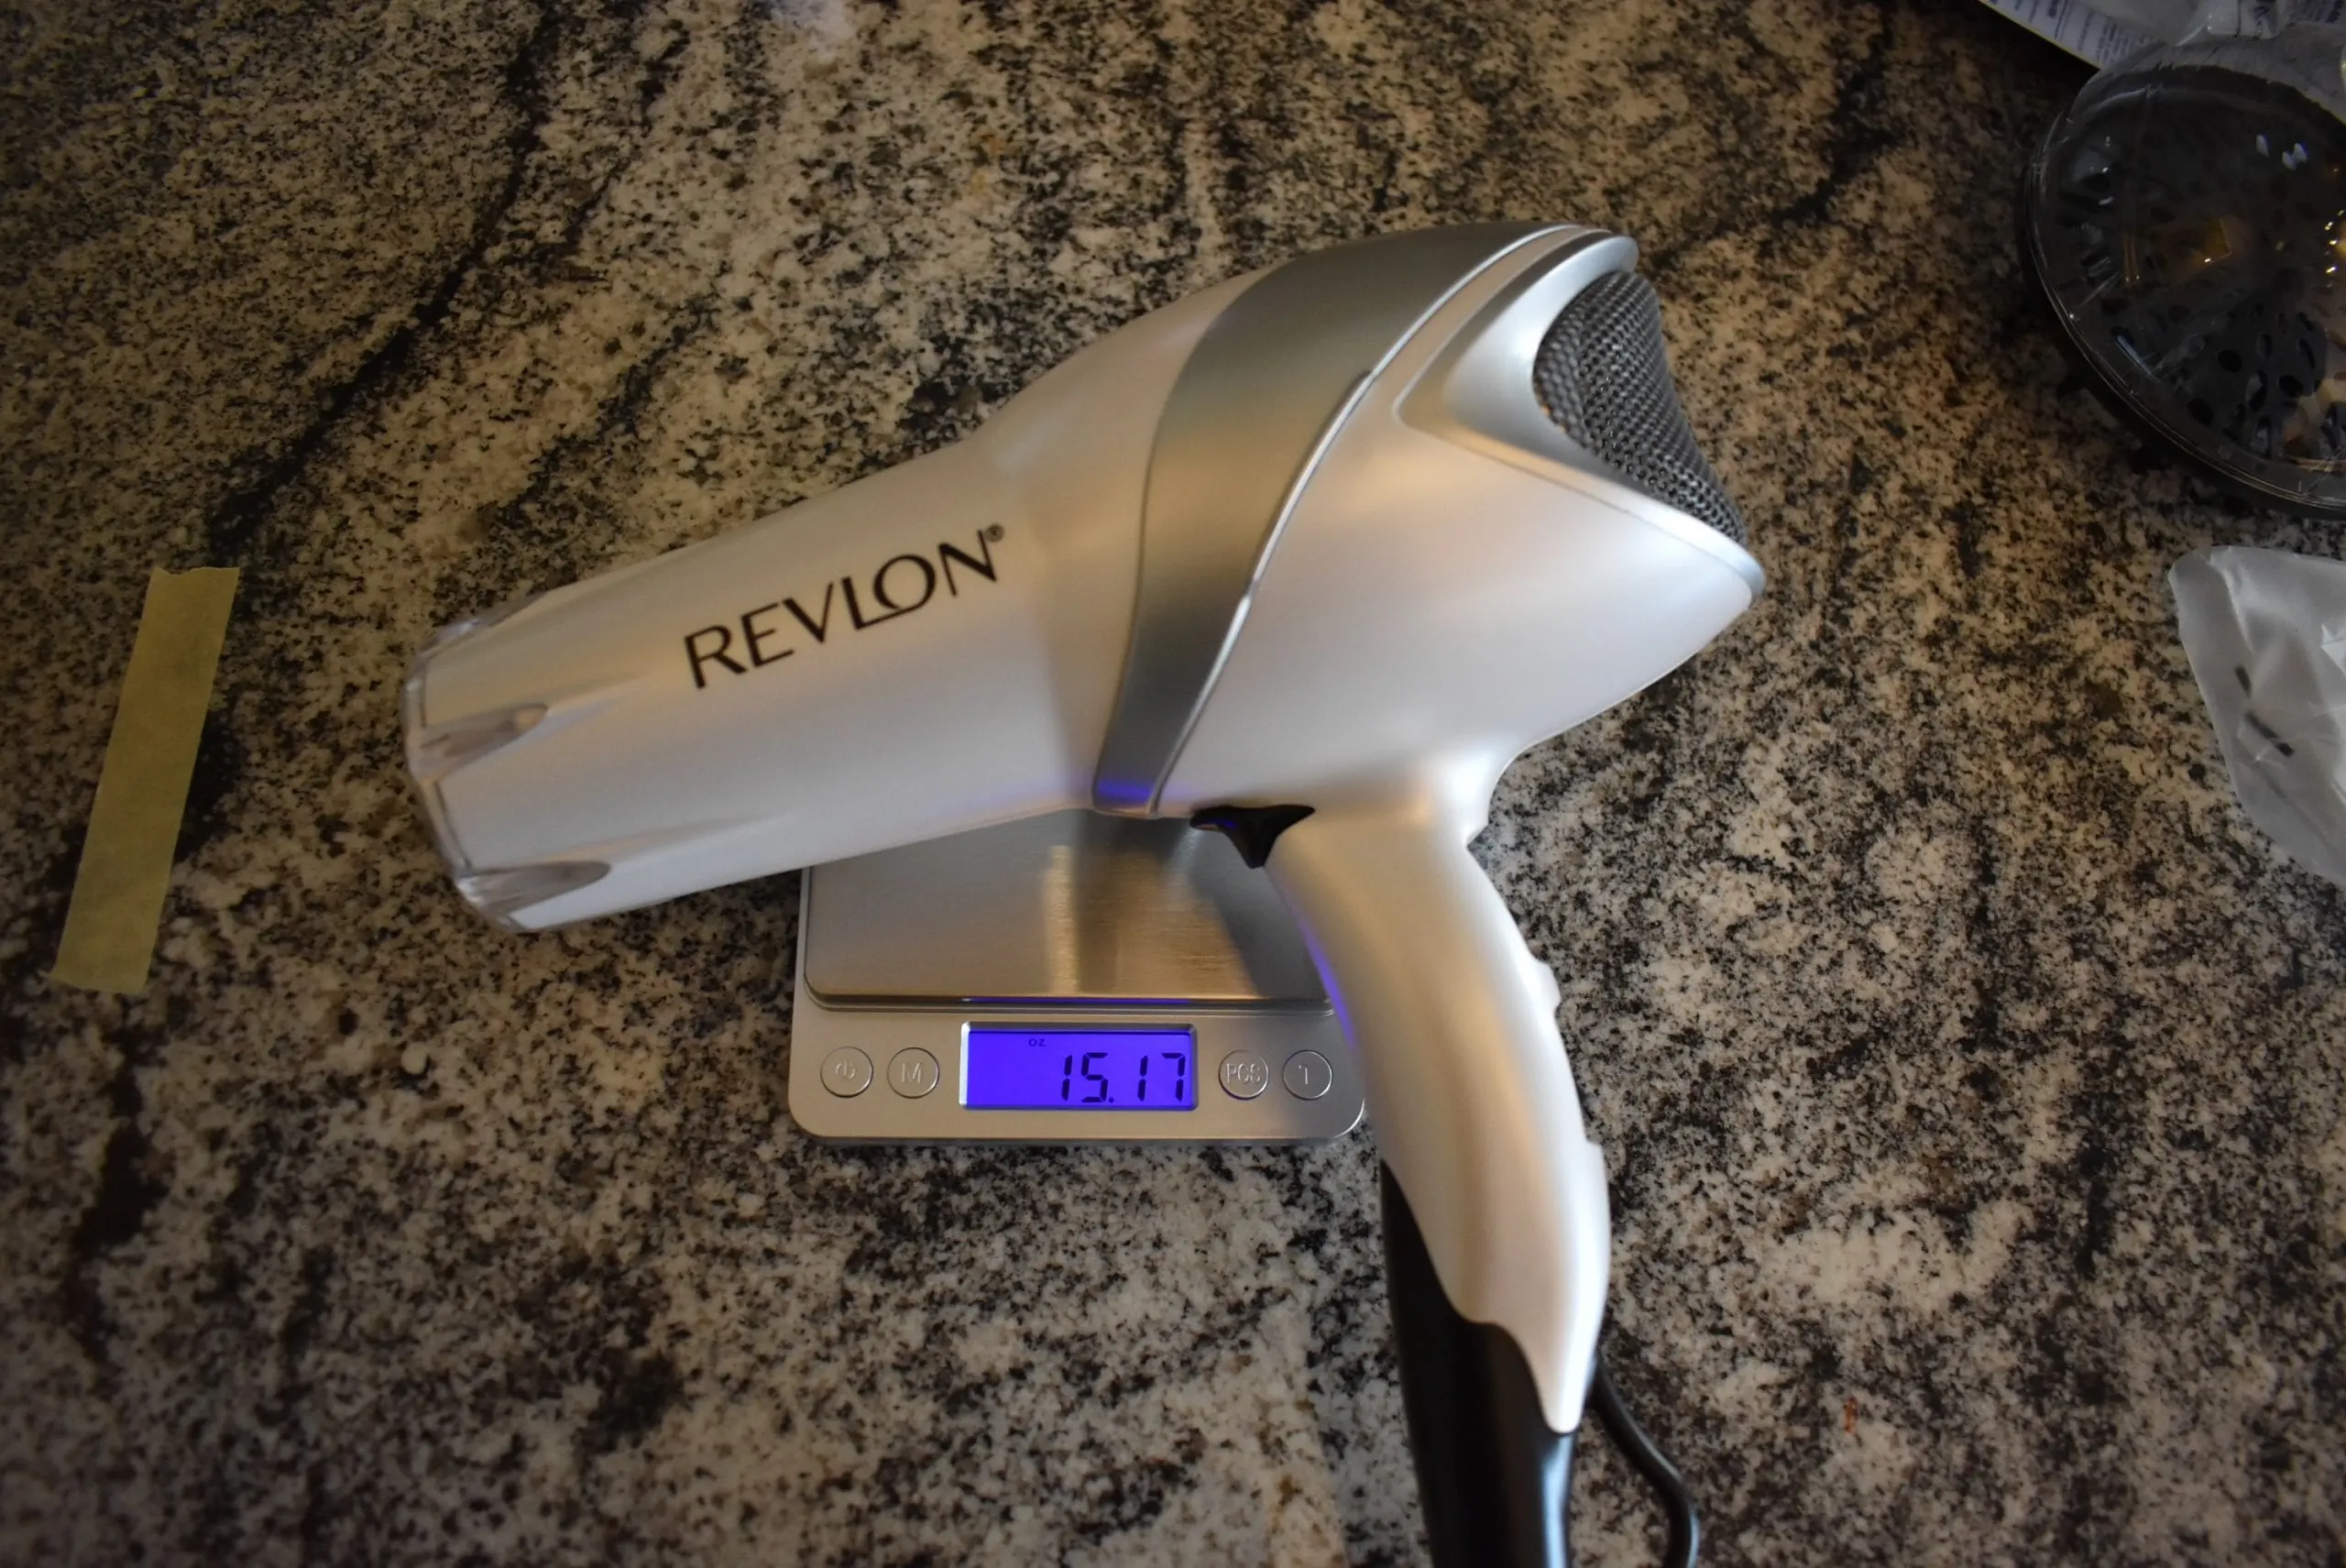 The revlon white hair dryer on a scale reading 15.17 oz